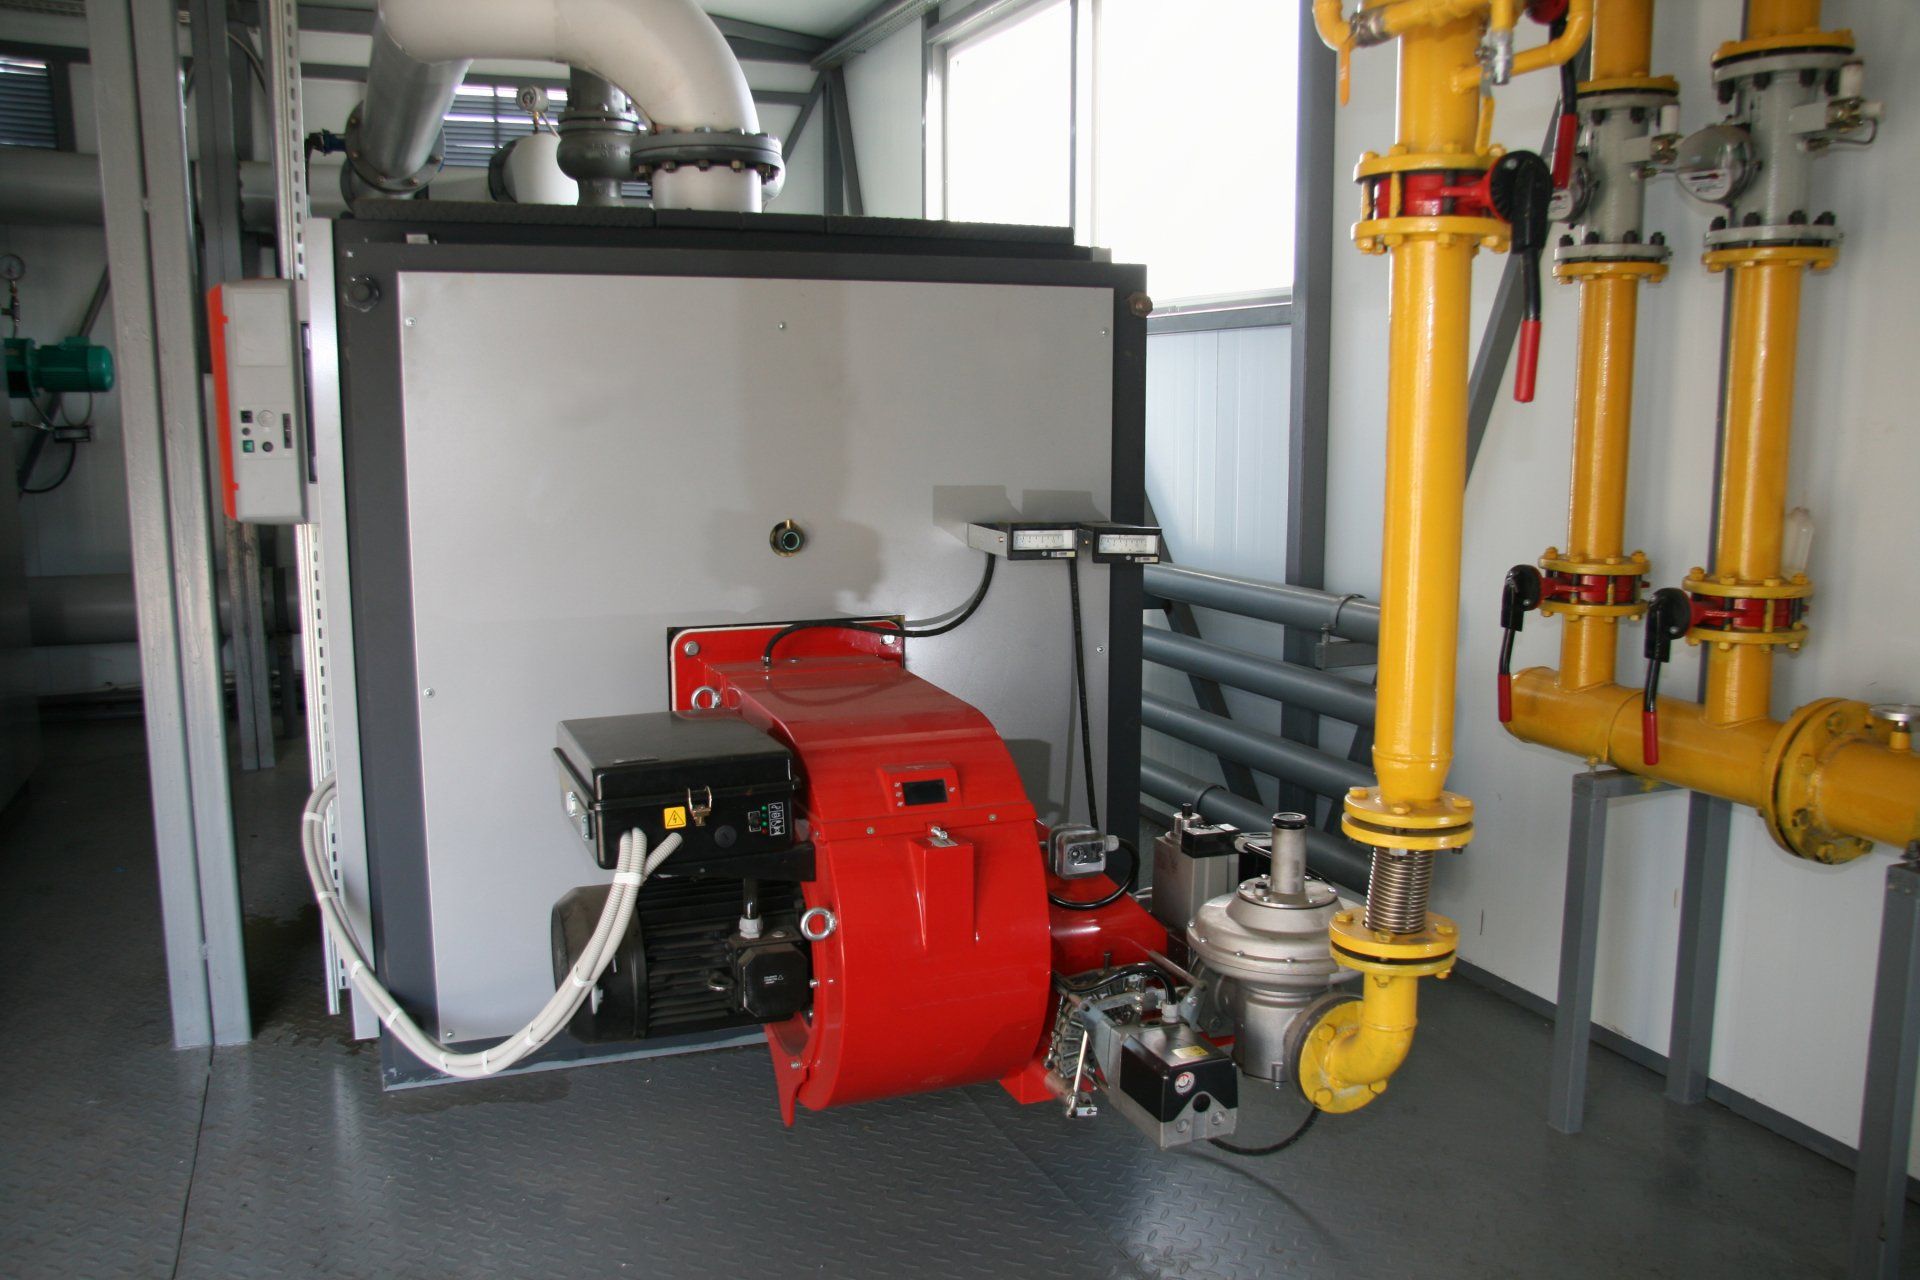 Water Heater Installed in Basement | Derry, NH | Derry Plumbing & Heating